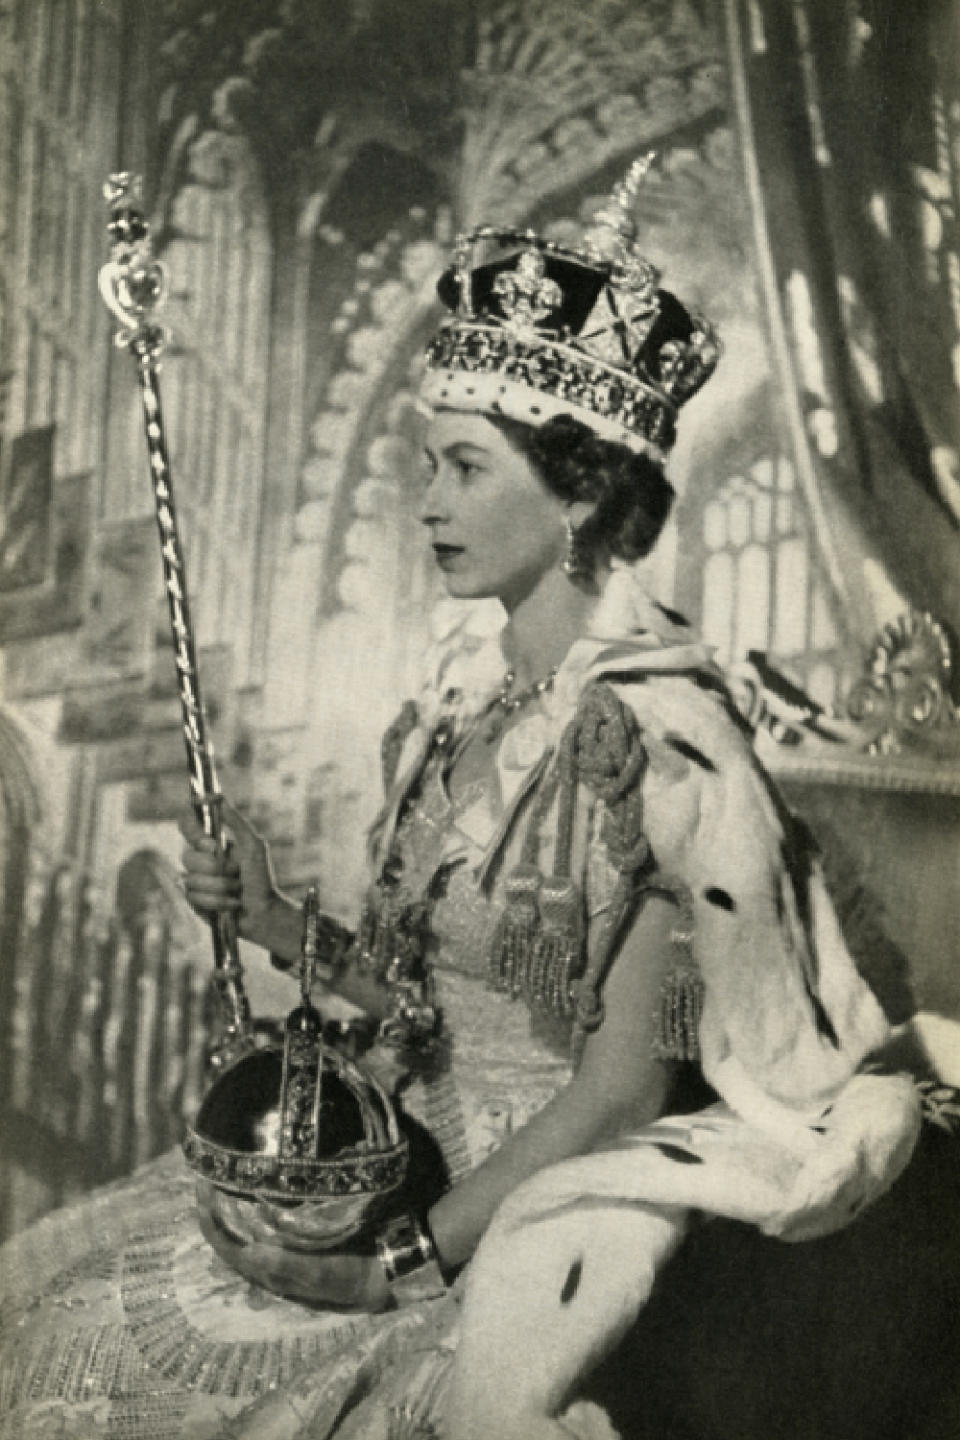 Queen Elizabeth II's portrait on her Coronation Day